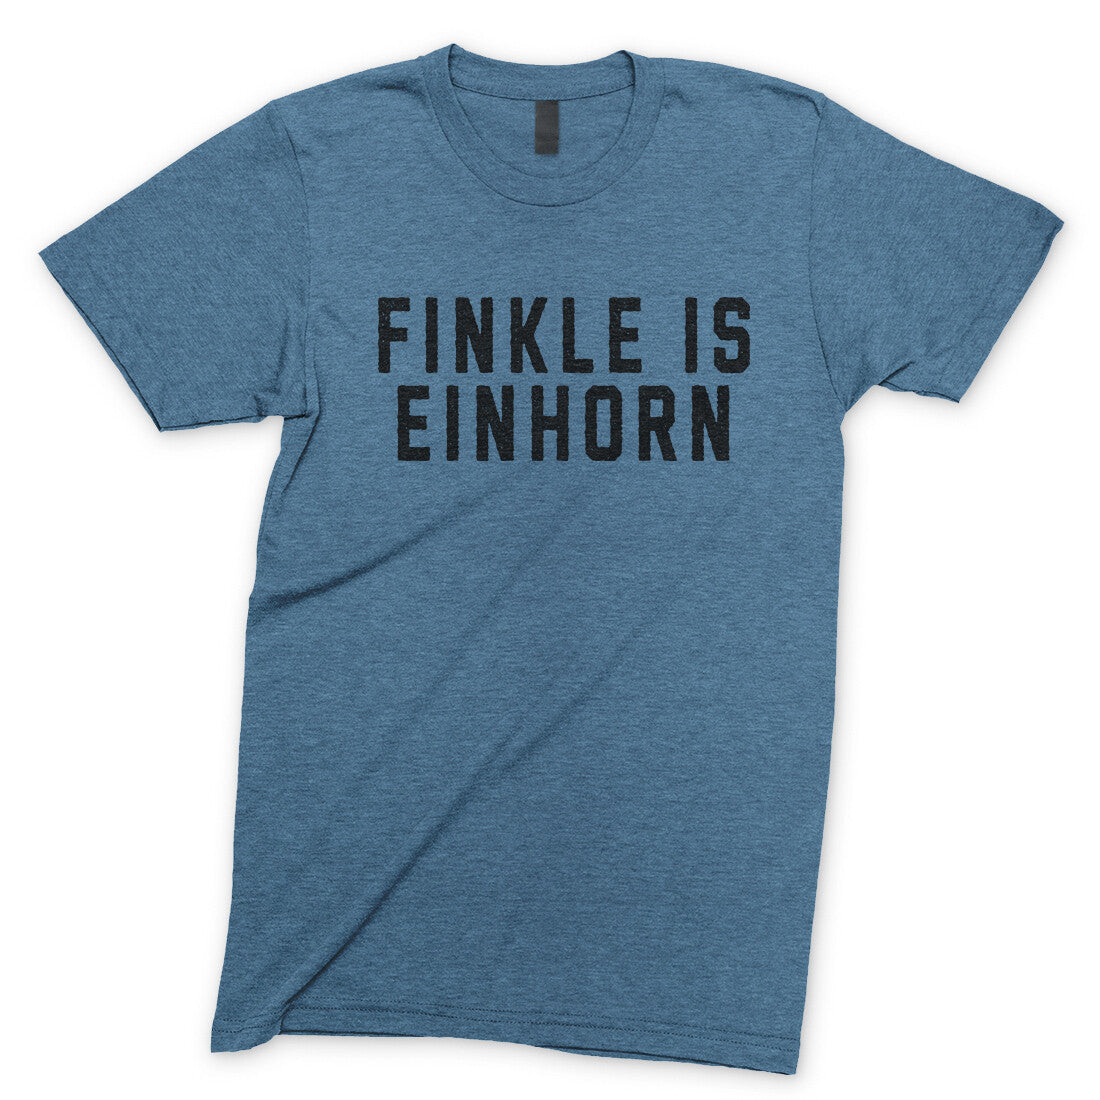 Finkle is Einhorn in Heather Indigo Color